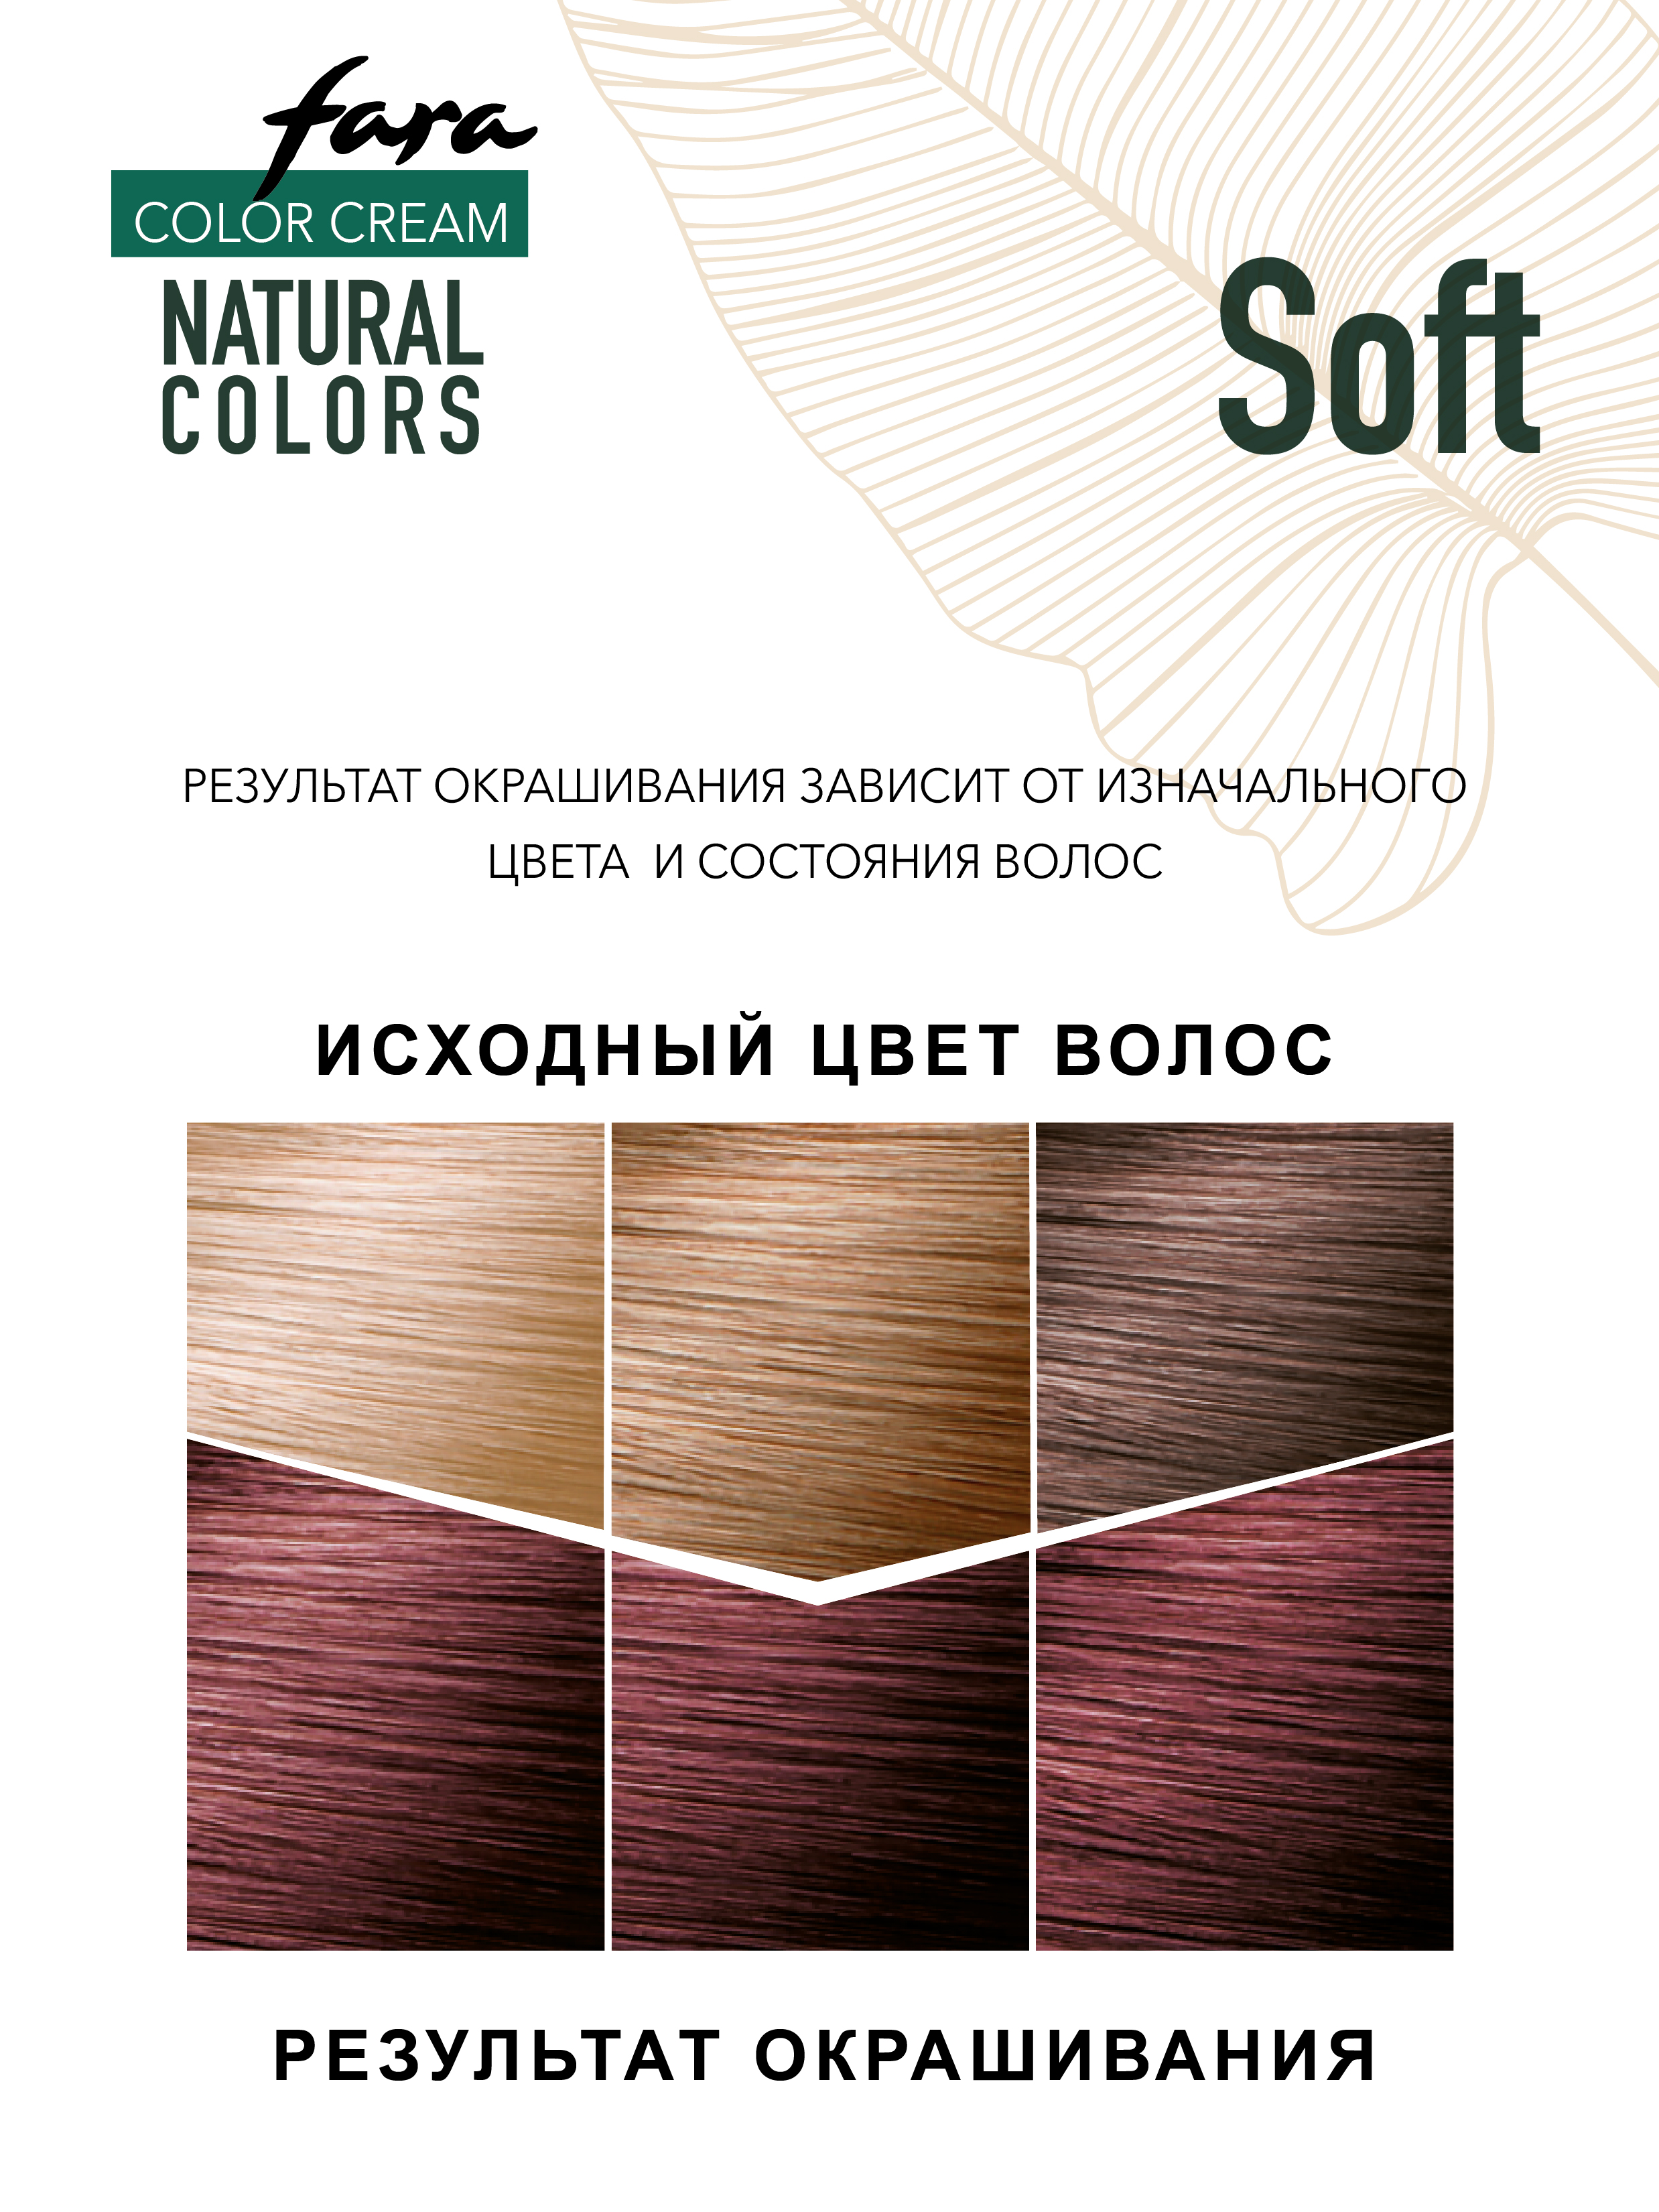 Краска для волос FARA Natural Colors Soft 324 темный рубин - фото 5